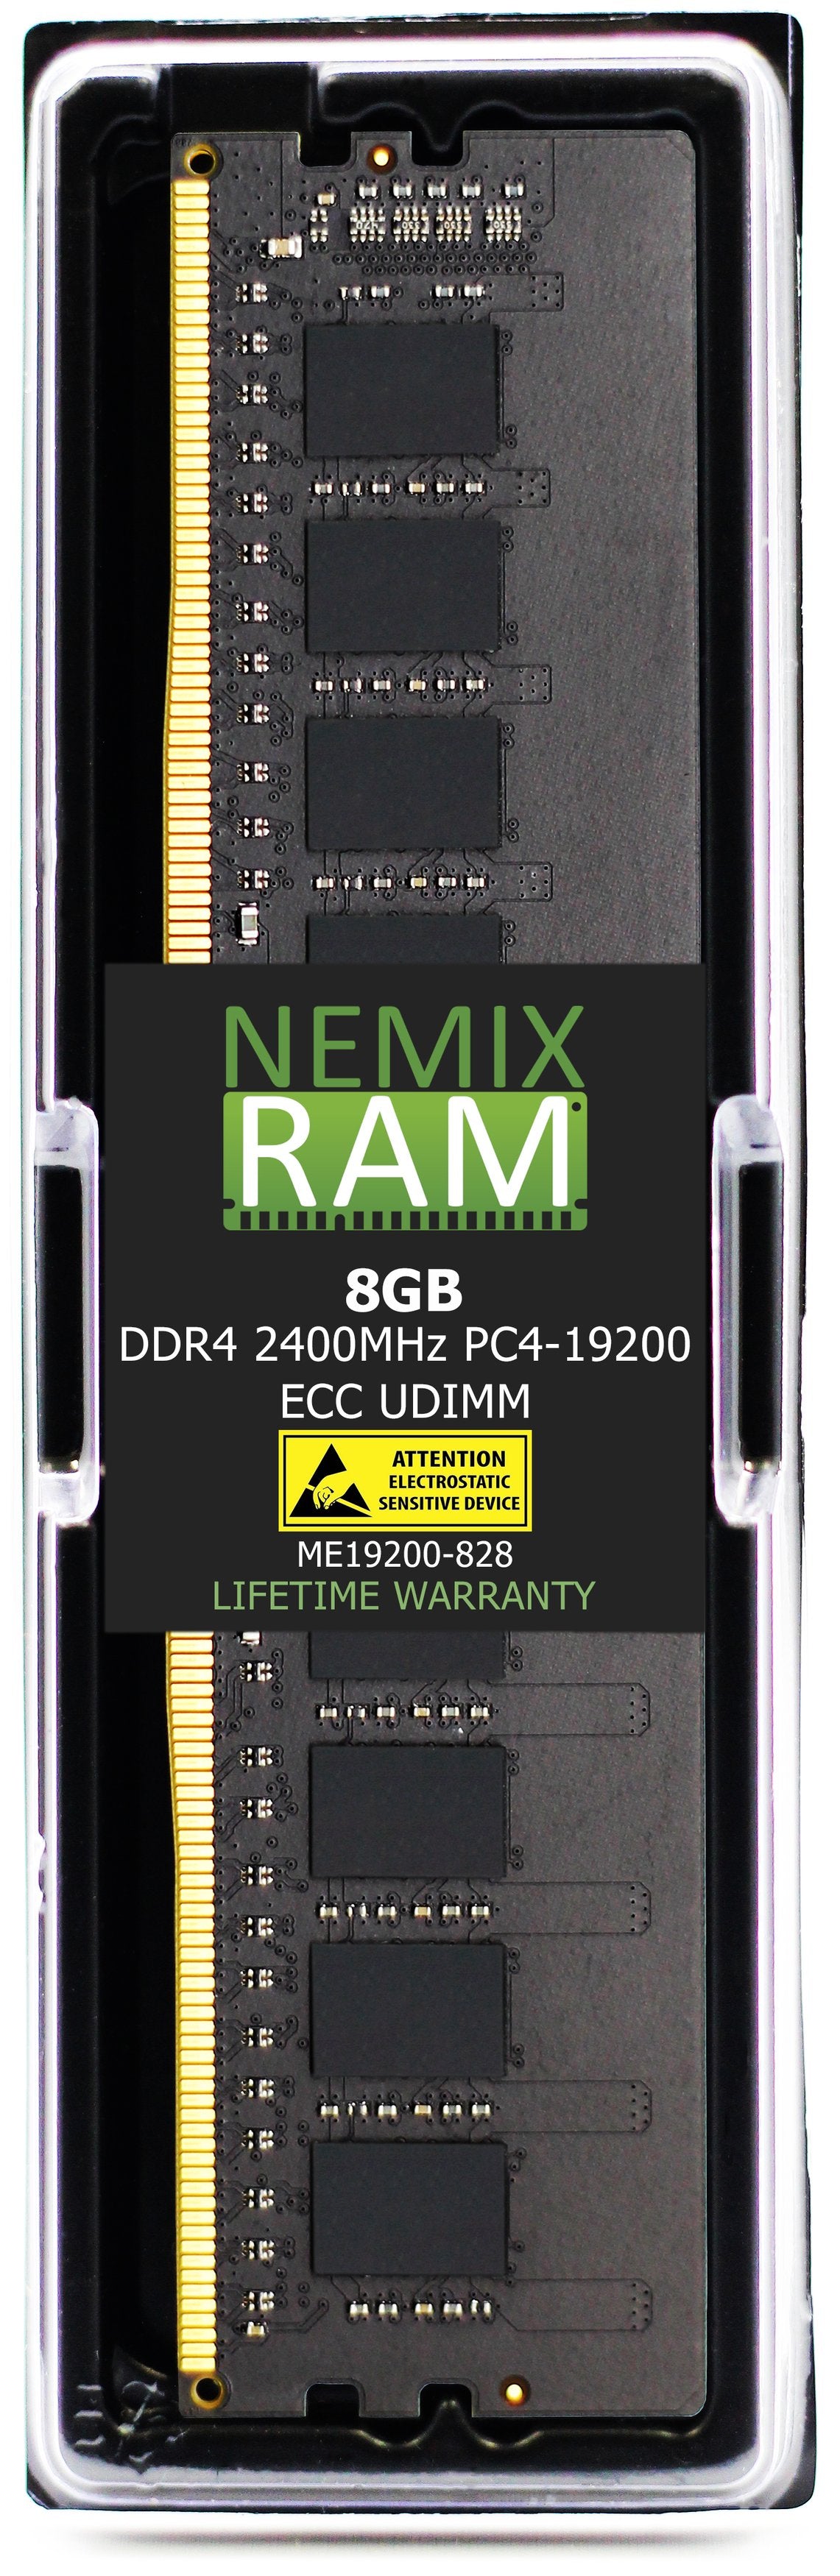 NEC Express5800 T110i Memory Module N8102-701F 8GB DDR4 2400MHZ PC4-19200 ECC UDIMM